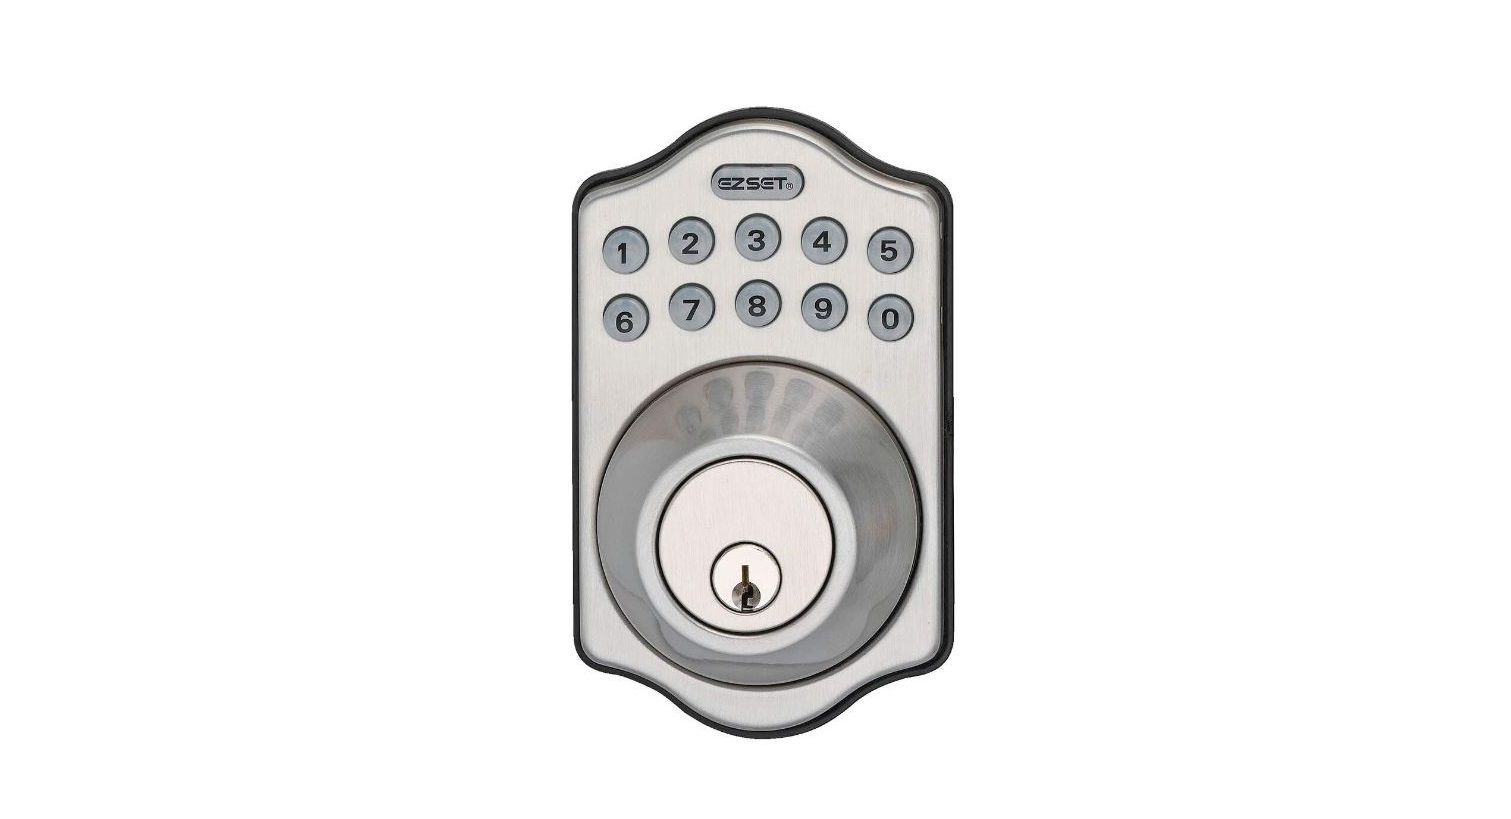 EZSCT Keypad Electronic Door Lock feature